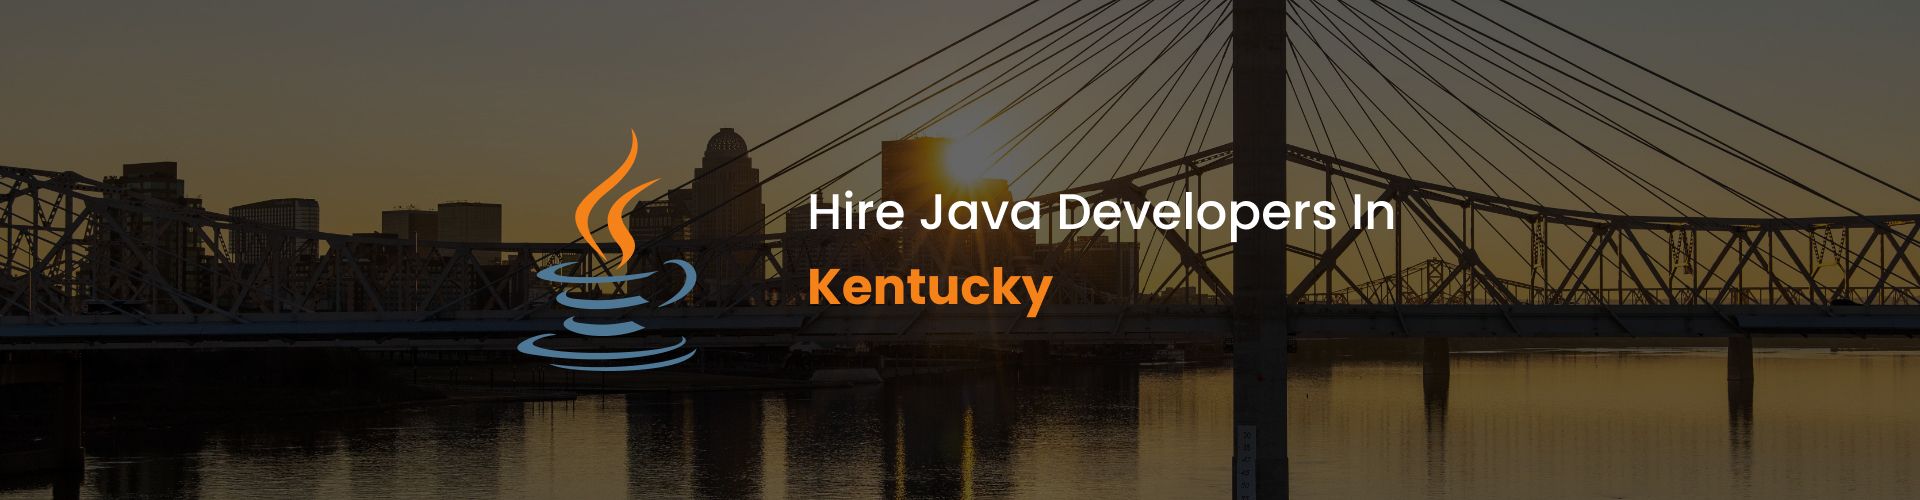 hire java developers in kentucky